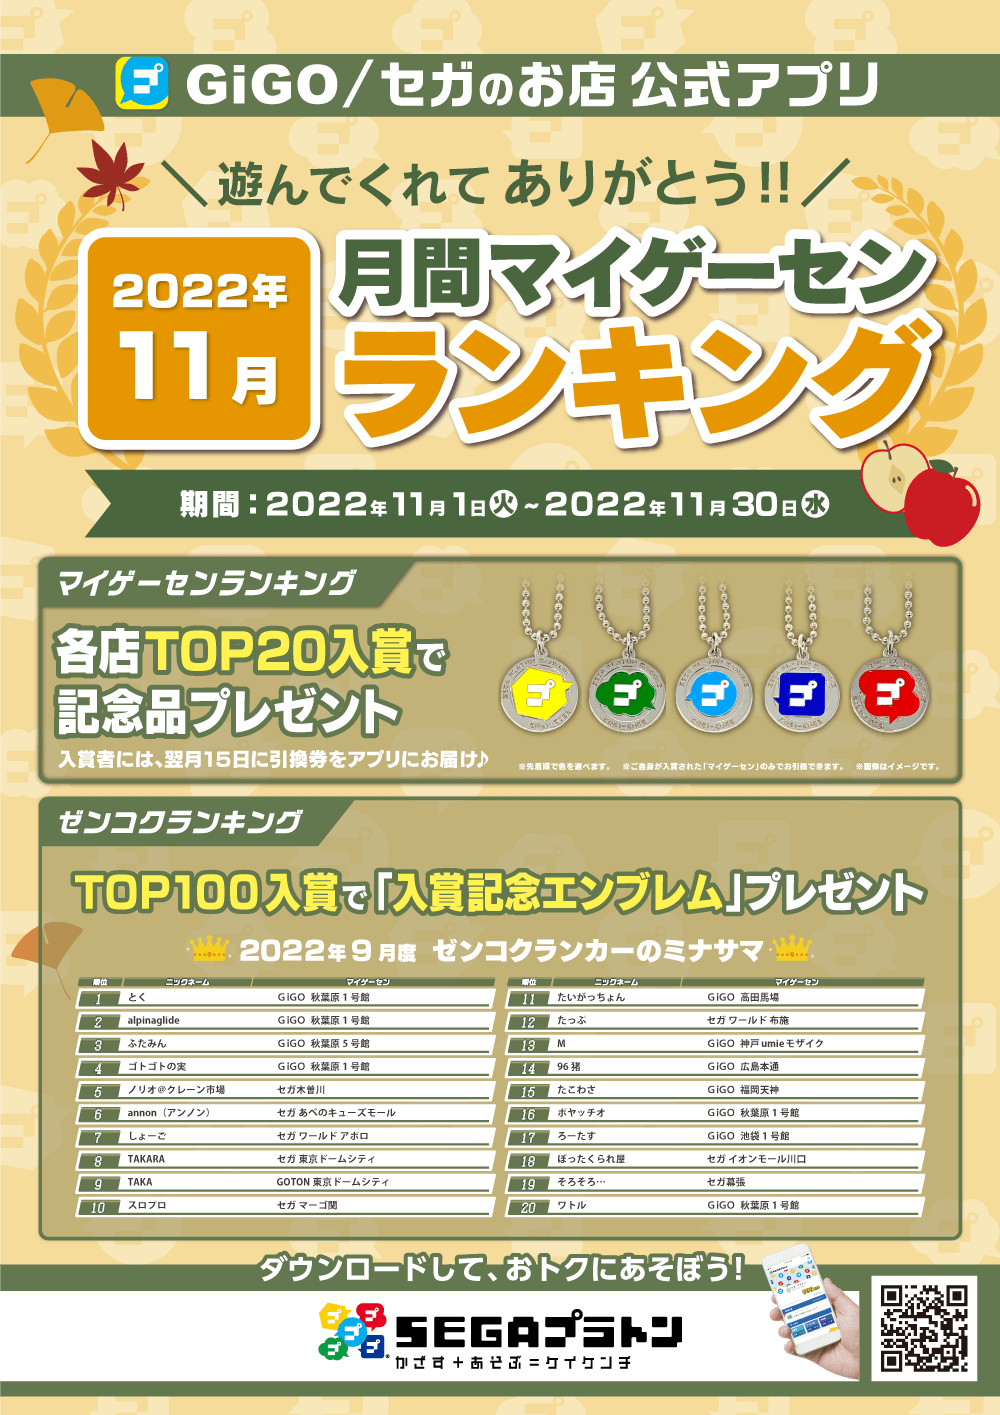 221013-0006-digital-PLATON_ranking_event-web-yoko_1000-min.png